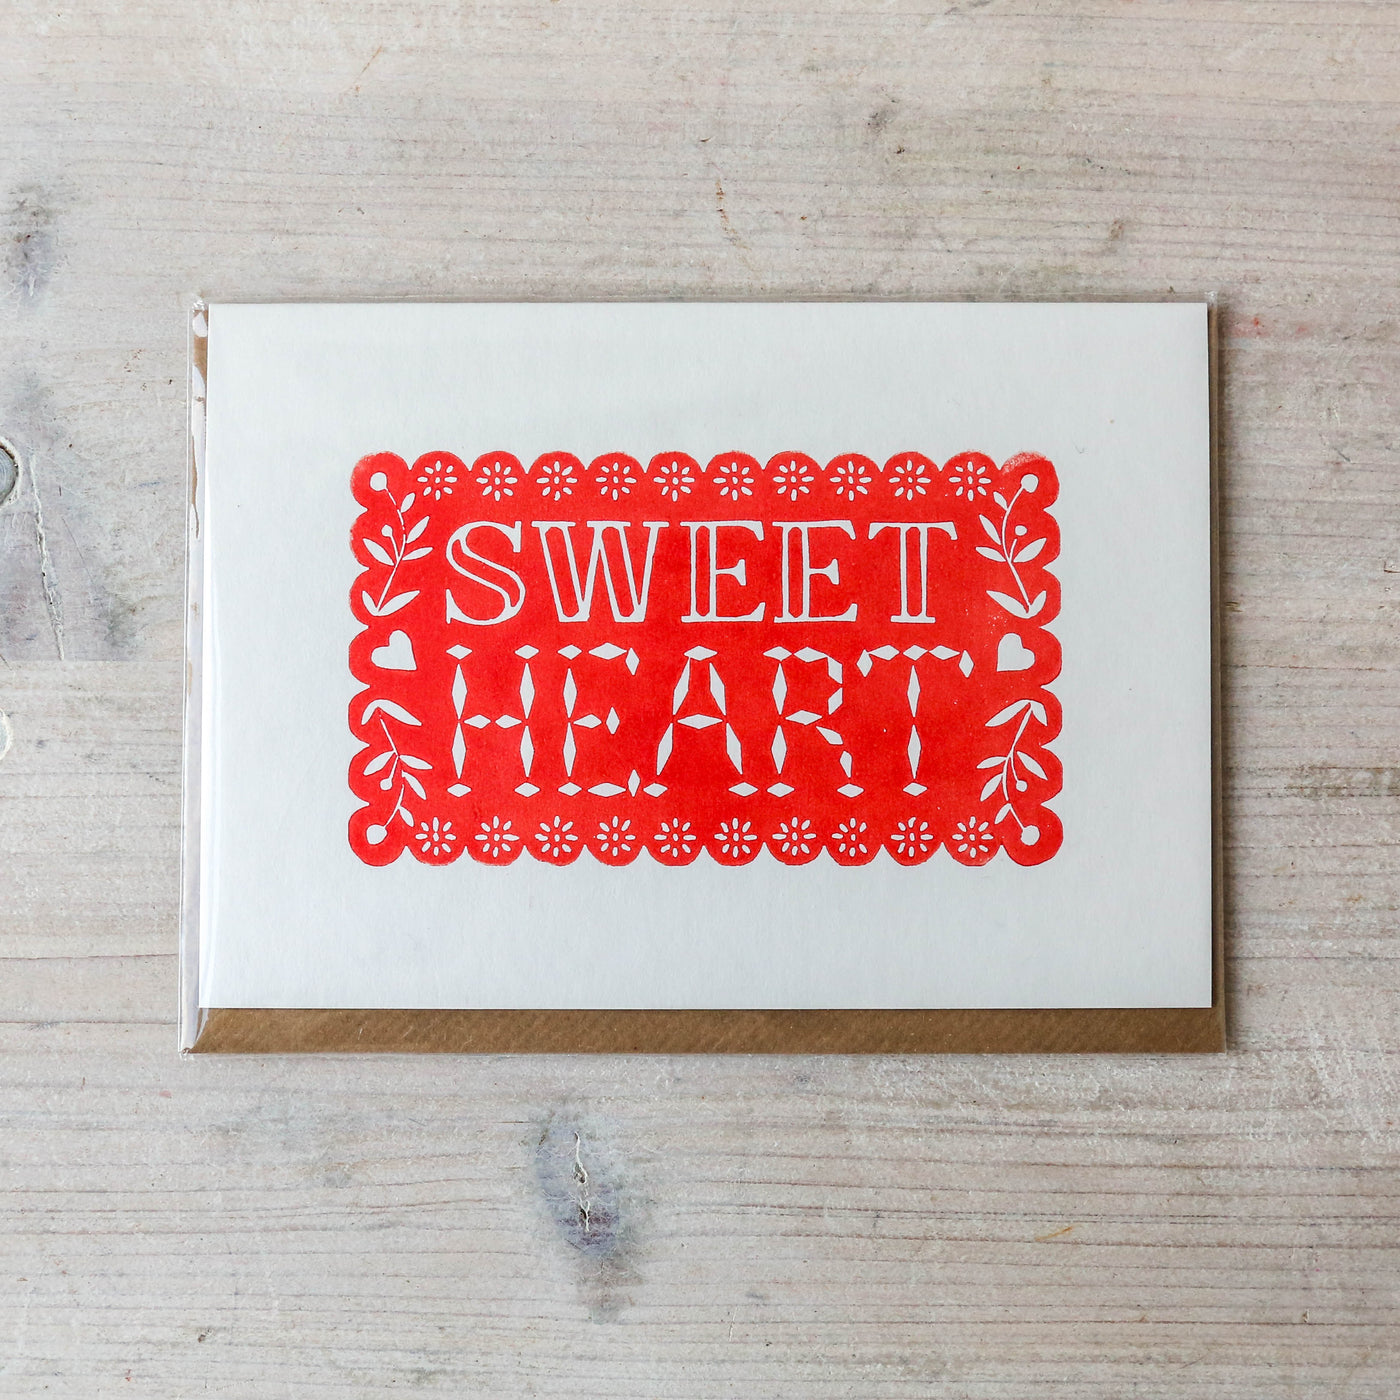 Sweet Heart Greetings Card